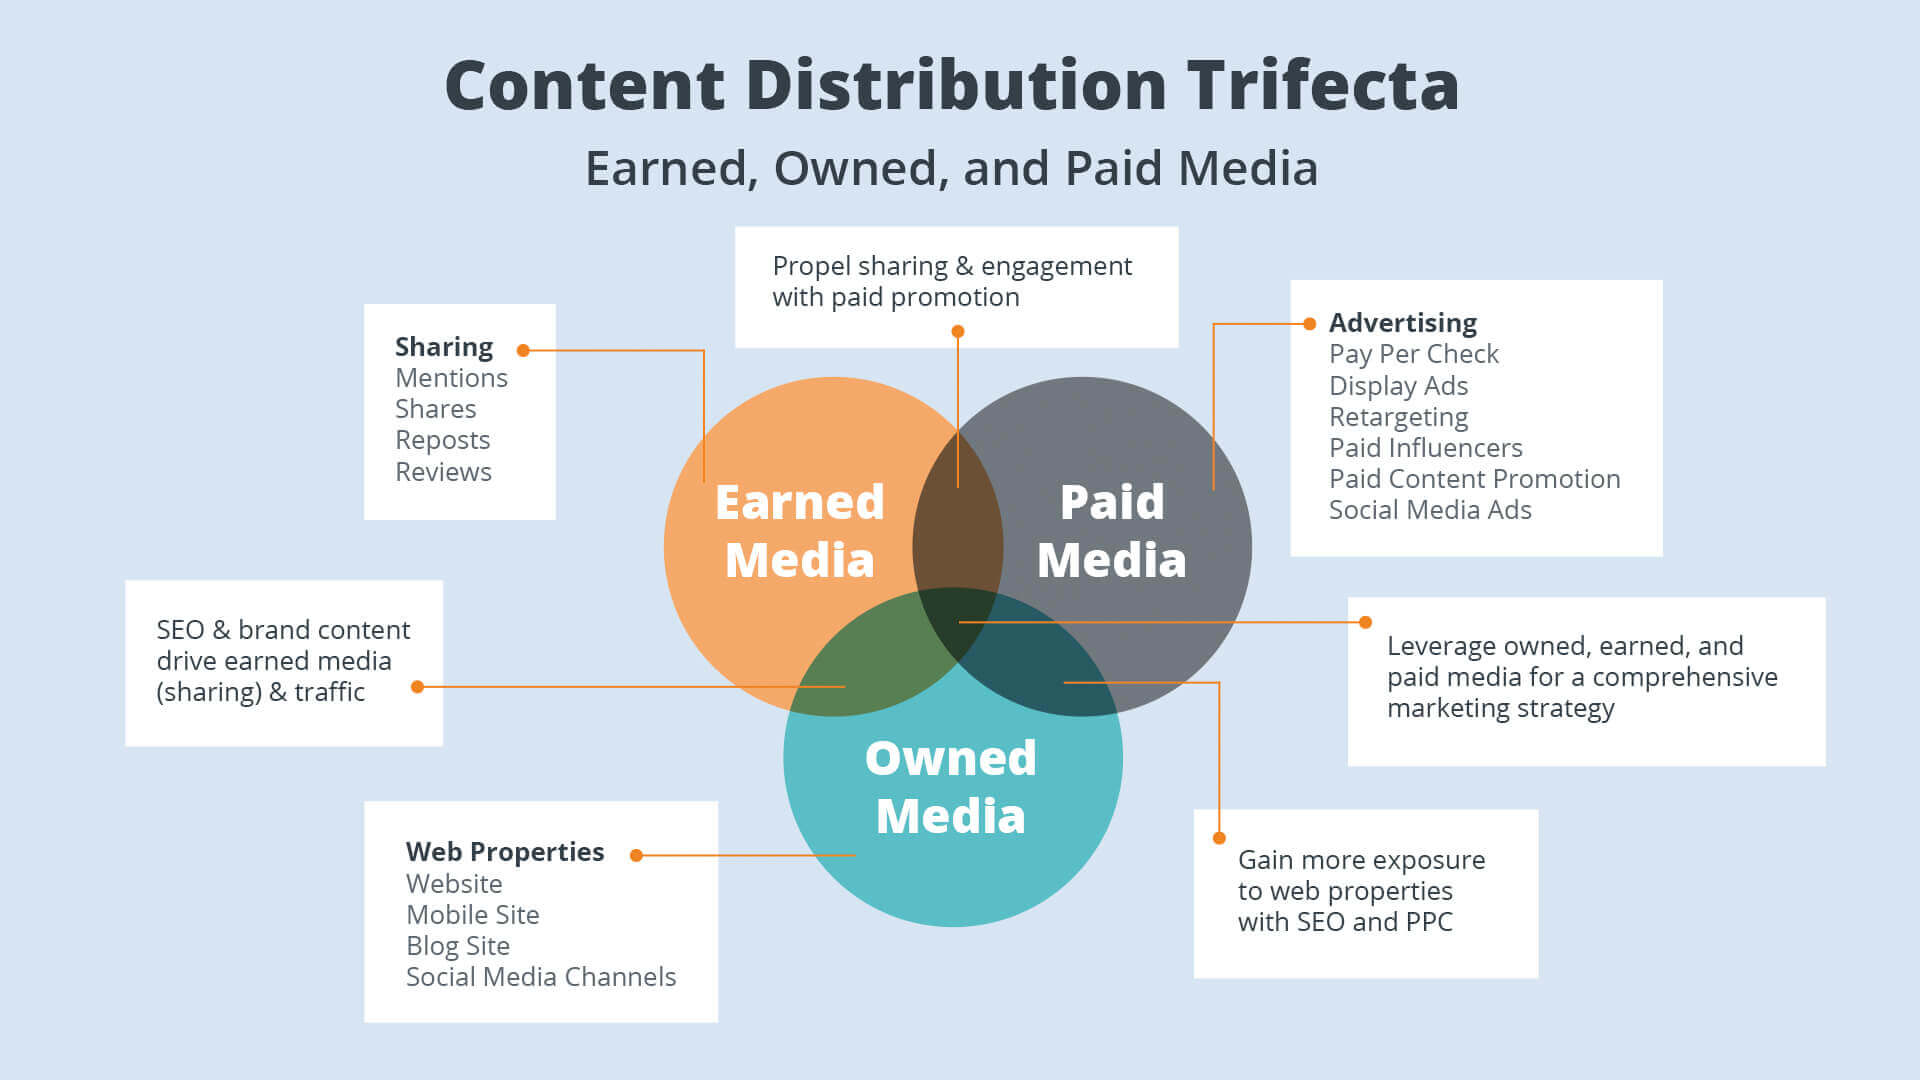 Content driven. Paid Media примеры. Схема дистрибуции контента. HR стратегия. Types of marketing Strategies.